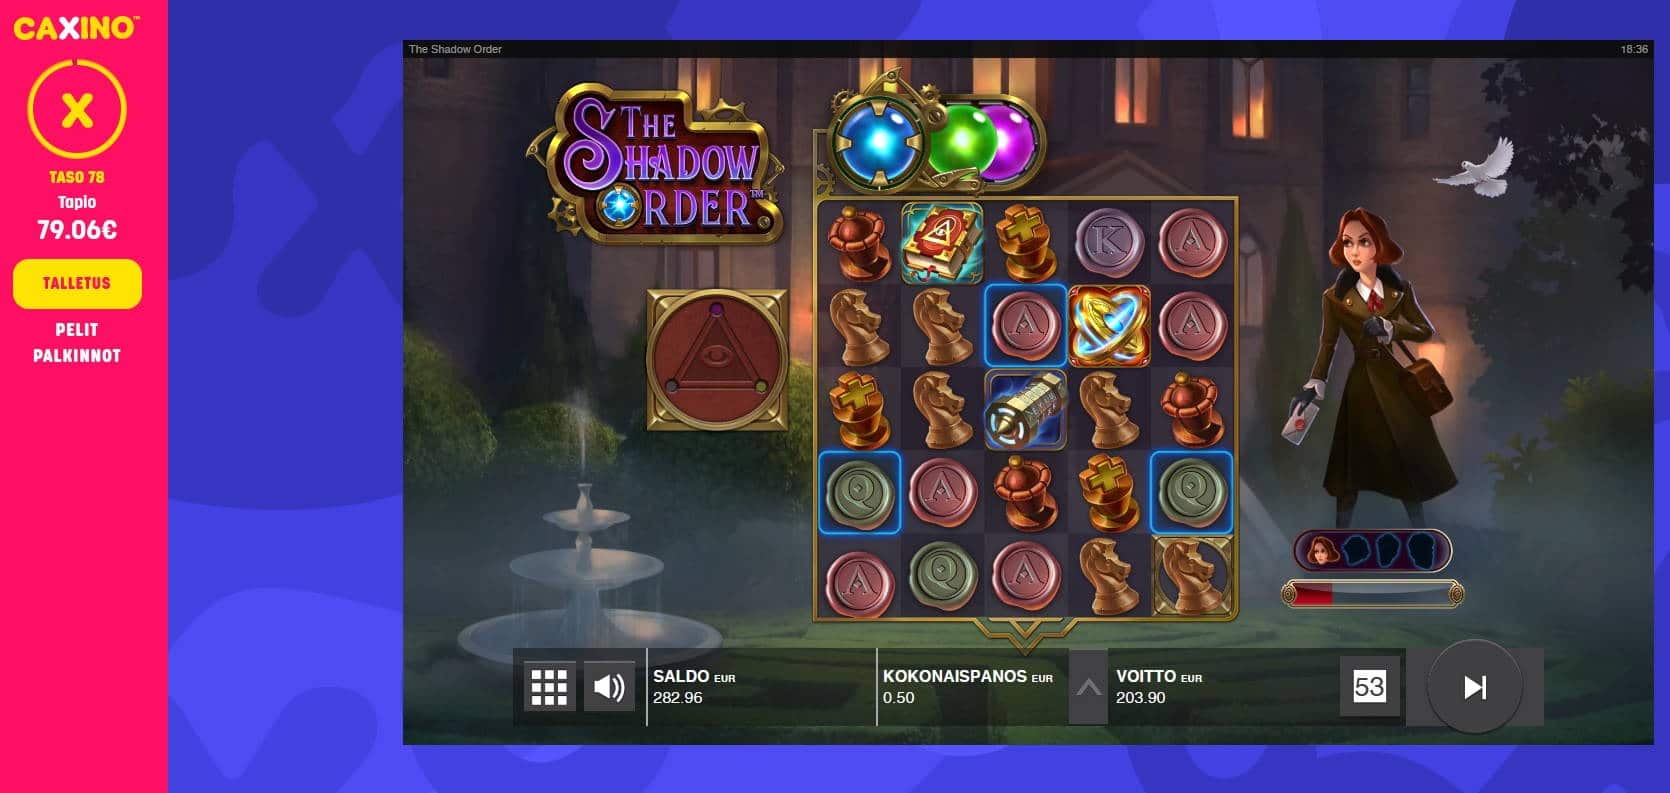 The Shadow Order Casino win picture by MrMork 19.6.2022 203.90e 408X Caxino